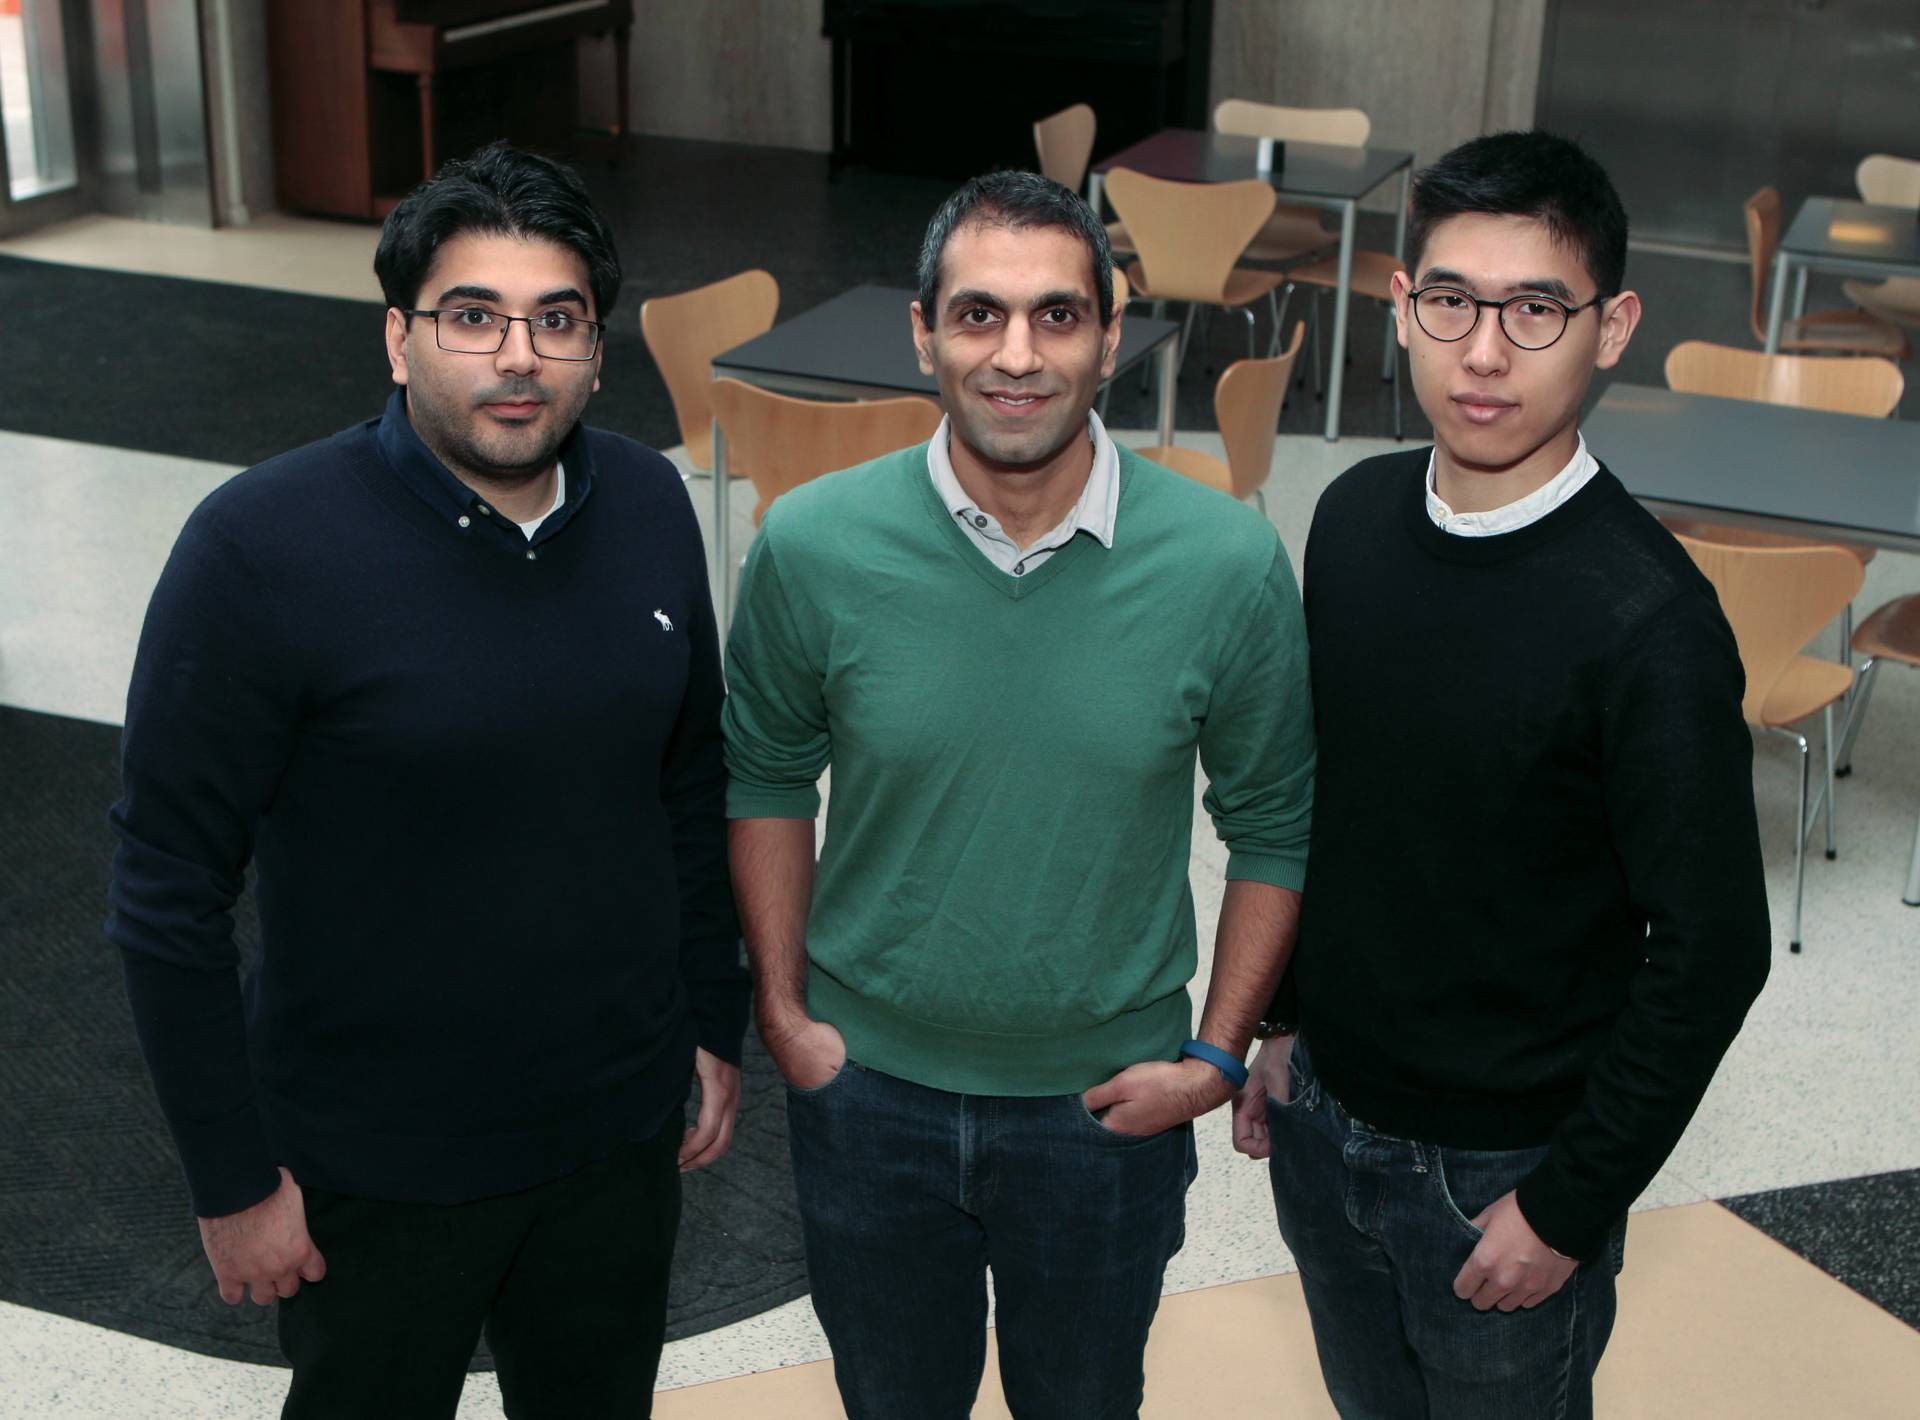 Researchers Naveen Verma, Hossein Valavi, and Hongyang Jia